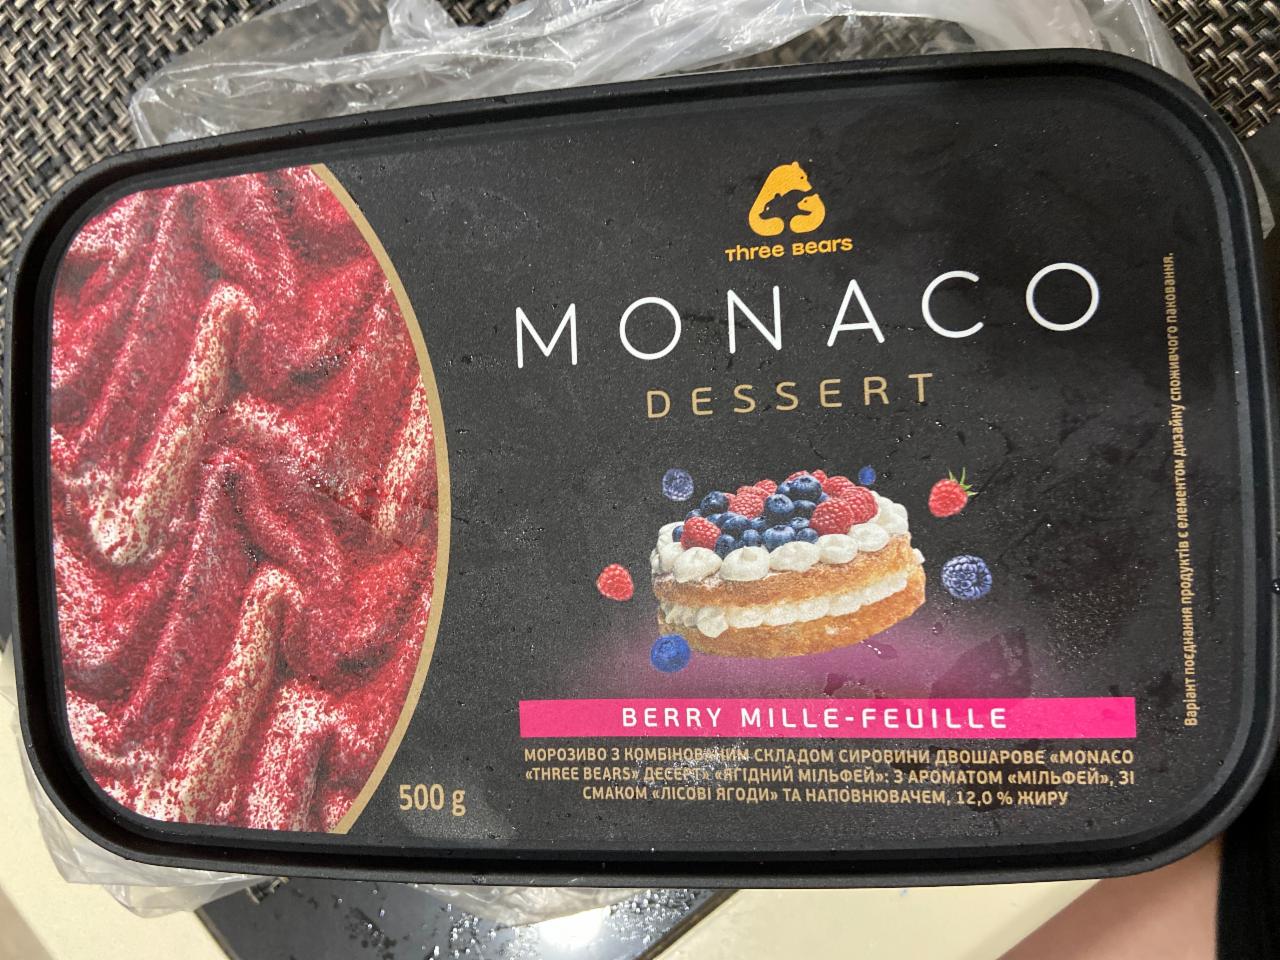 Фото - Monaco мороженое с ягодным милфеем Три ведмеді